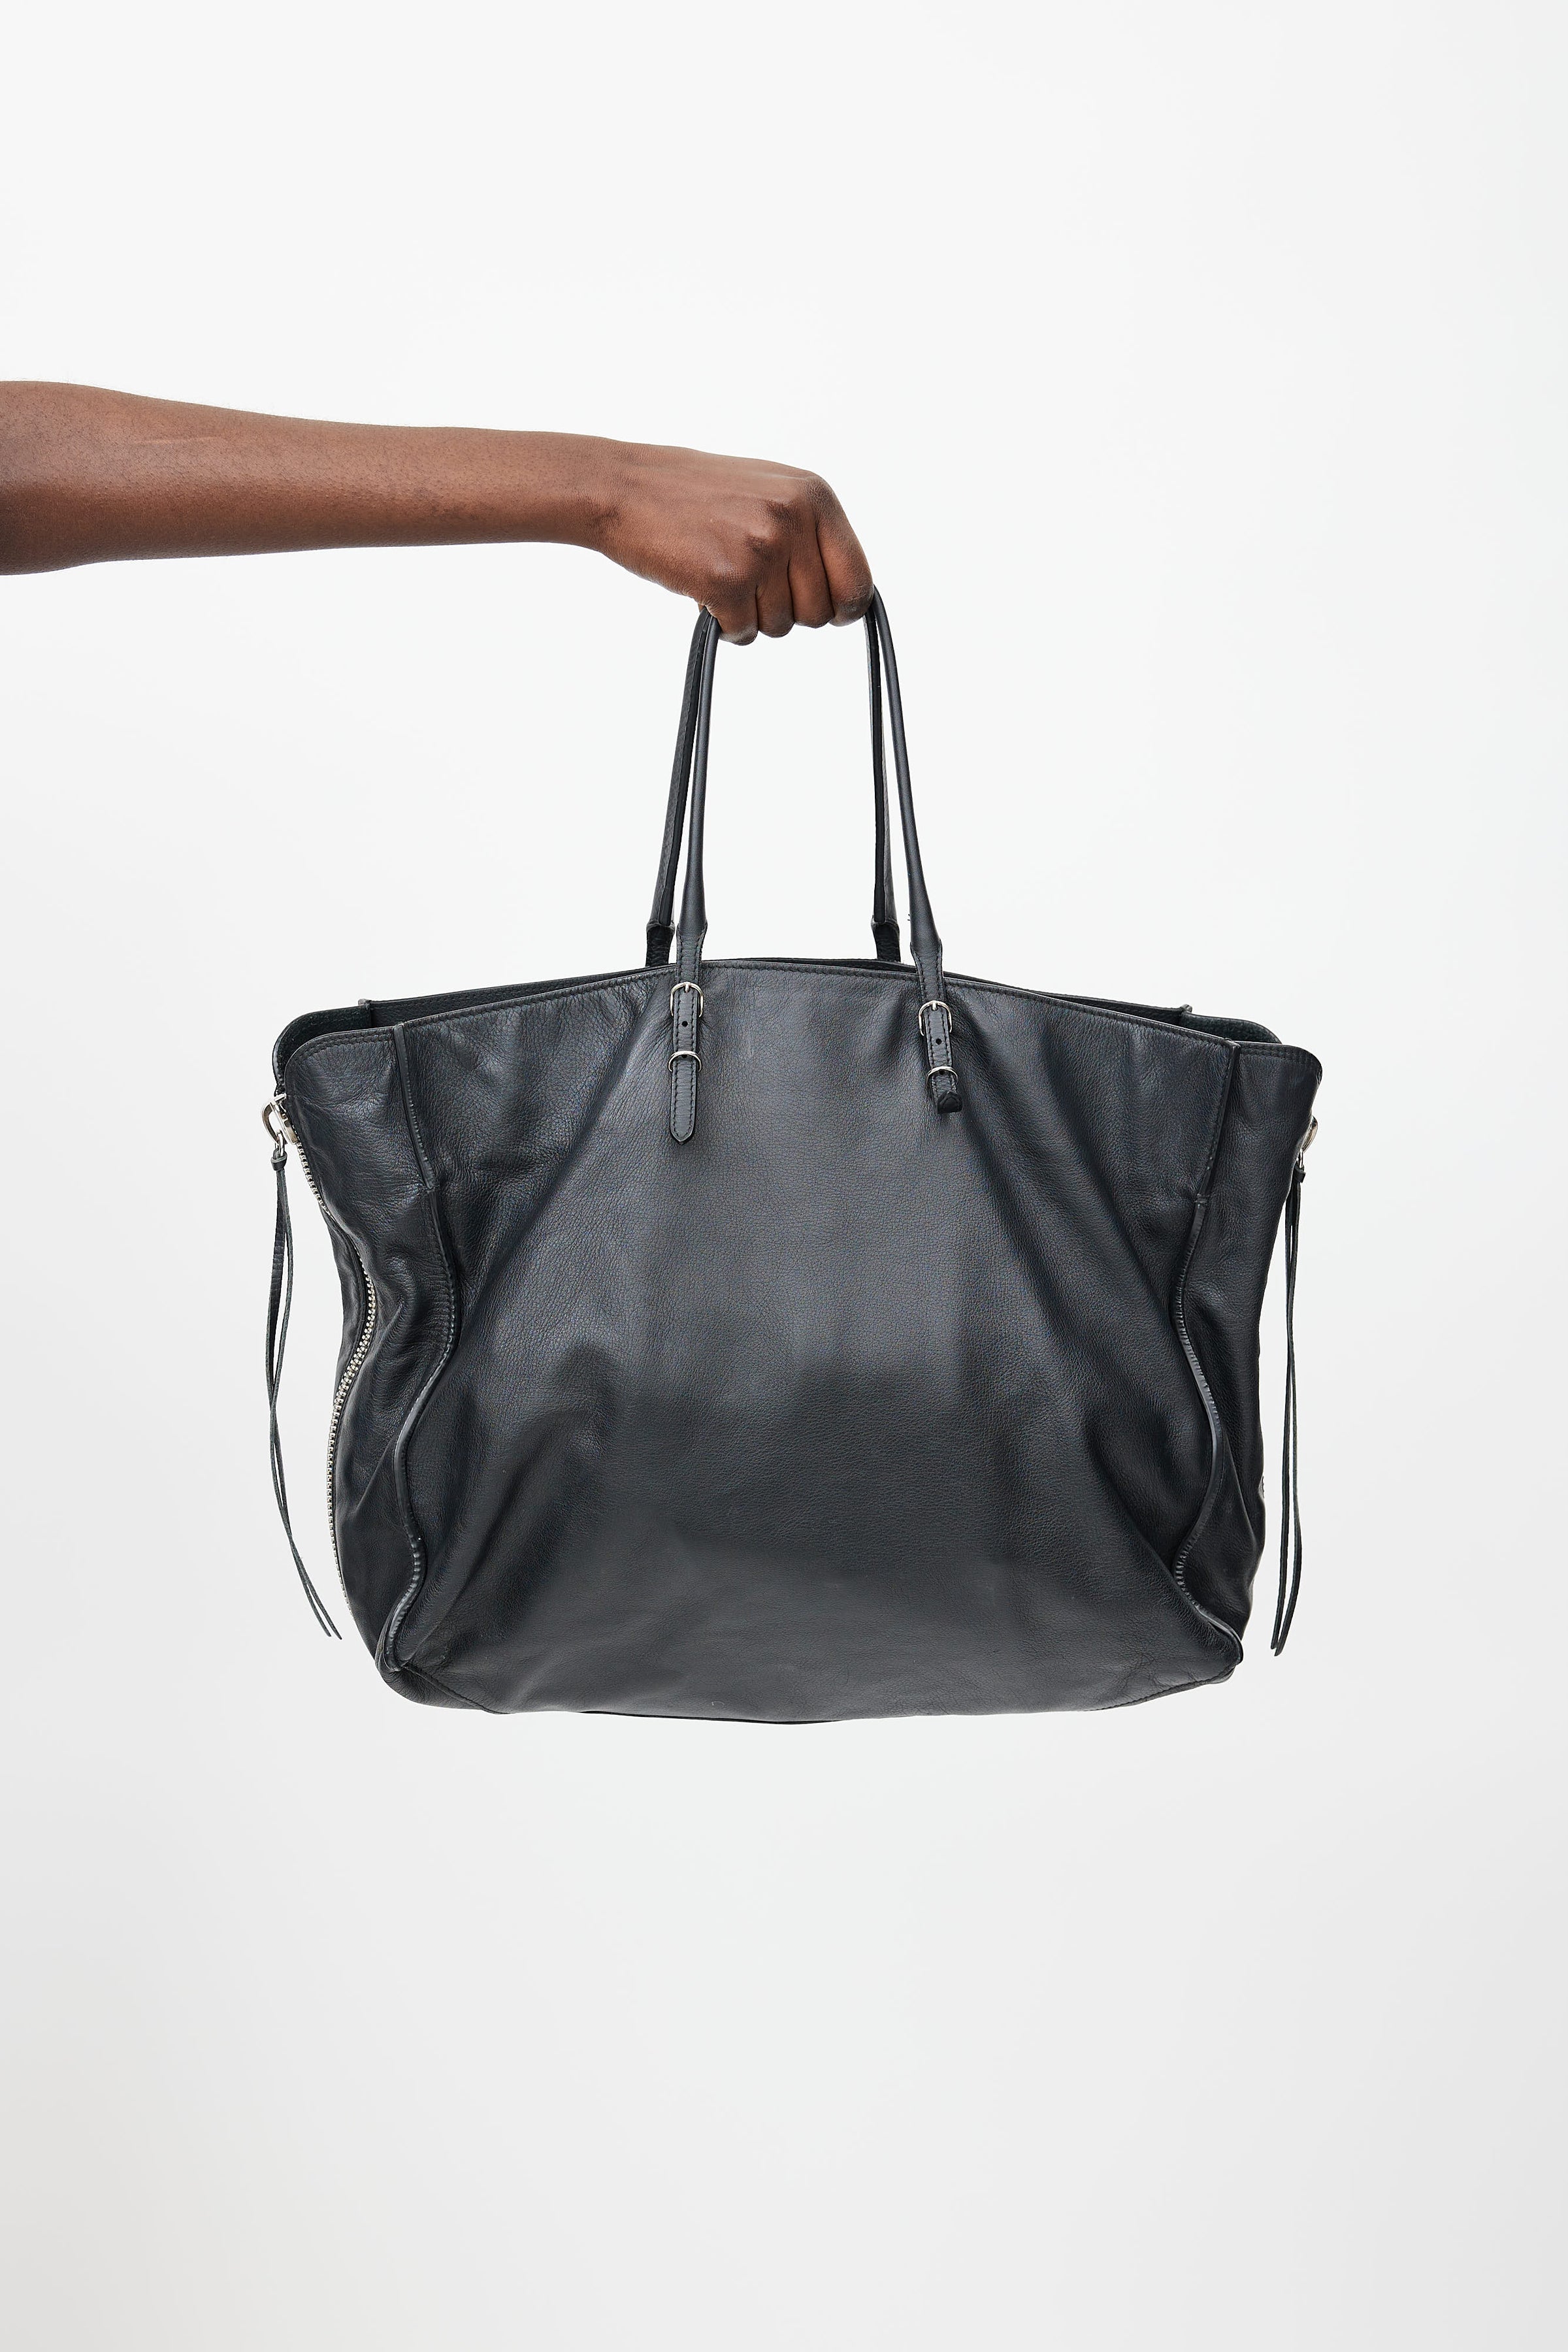 New $2225 Balenciaga Papier Leather A5 Zip Around Graine Double Black Tote  Bag